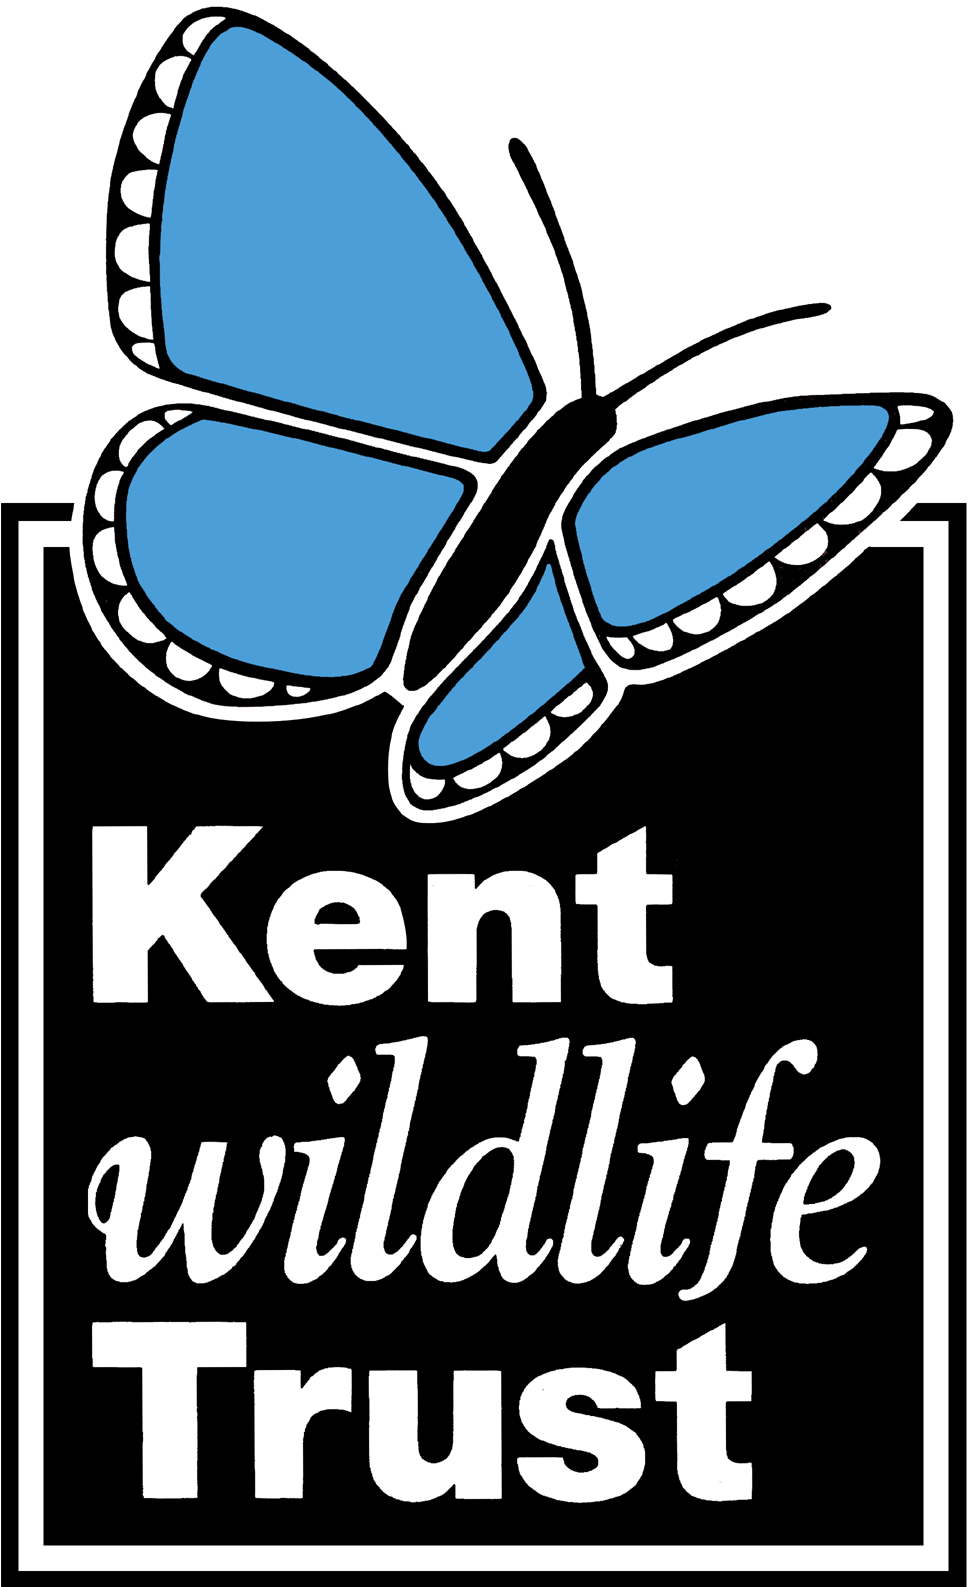 Home - Kent Wildlife Trust (1000x1586)